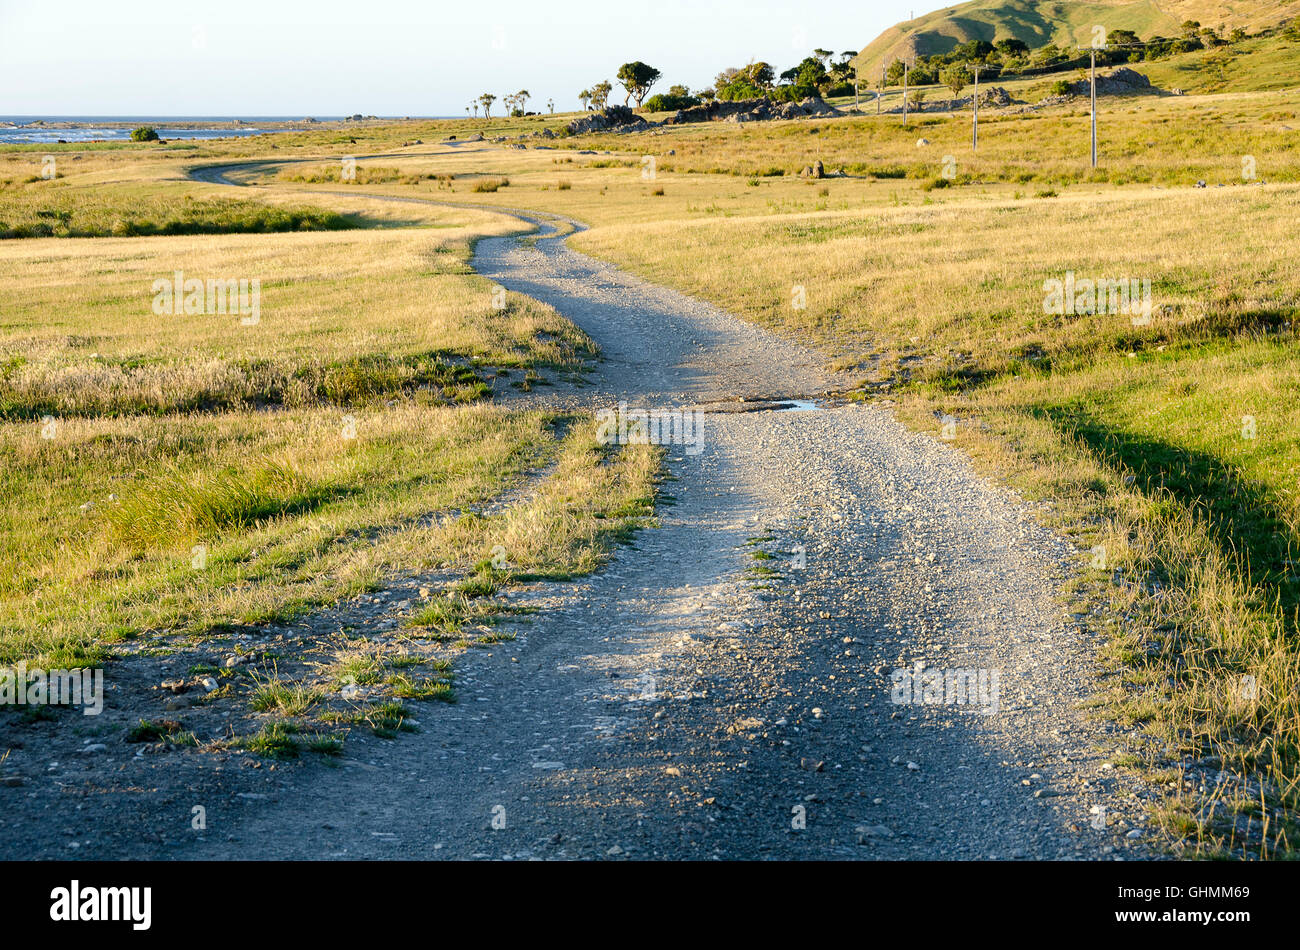 Kurvenreiche Schotterstraße, Glenburn, Wairarapa, Nordinsel, Neuseeland Stockfoto